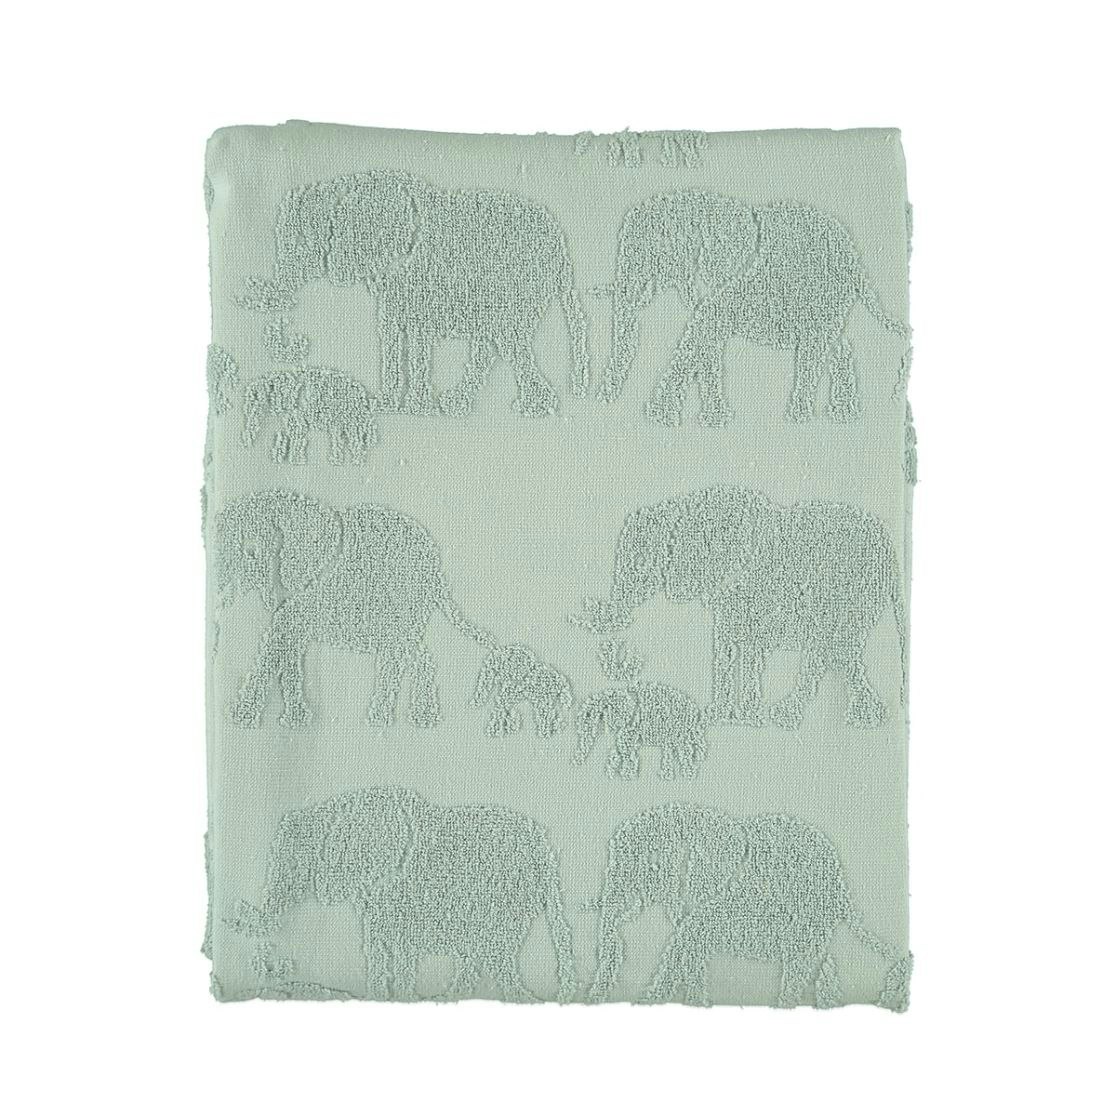 Elephant ett frottébadlakan från Noble house. Färg: Aqua grey.